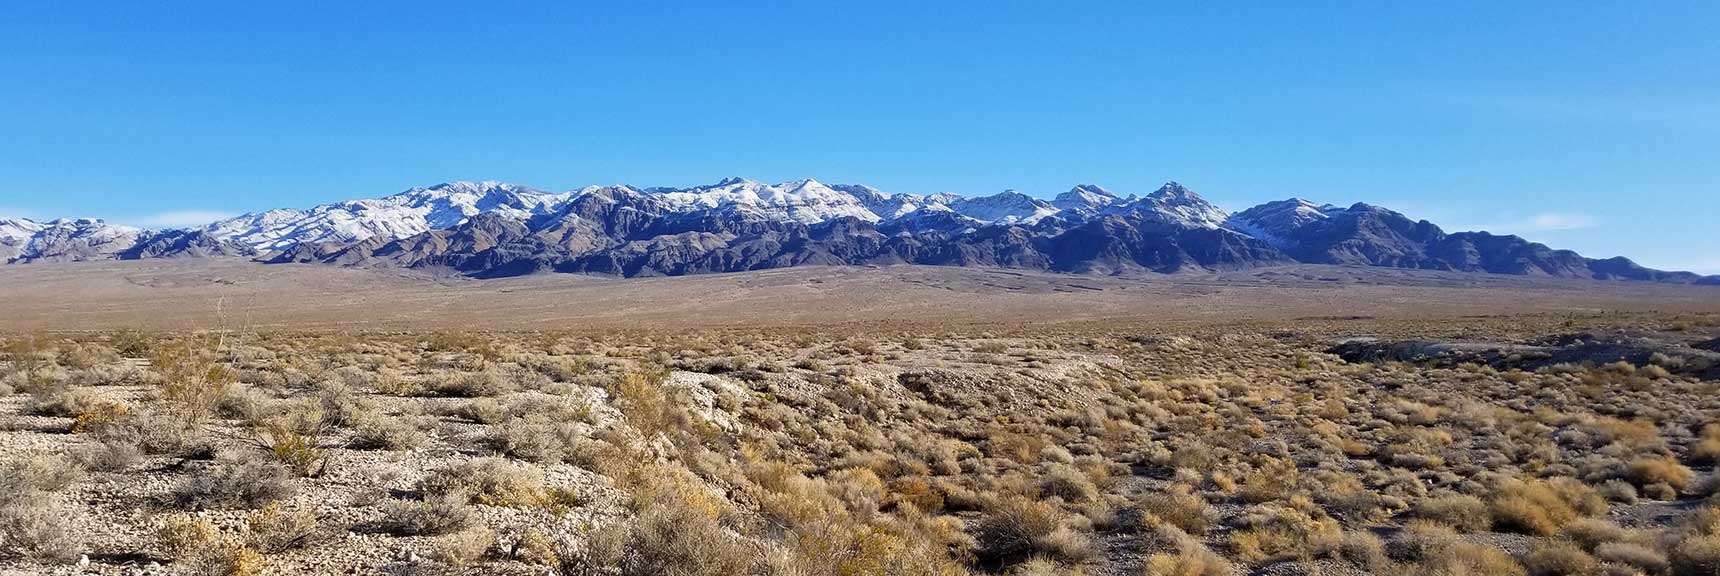 Sheep Range Viewed from The Desert National Wildlife Refuge Visitor Center, Nevada